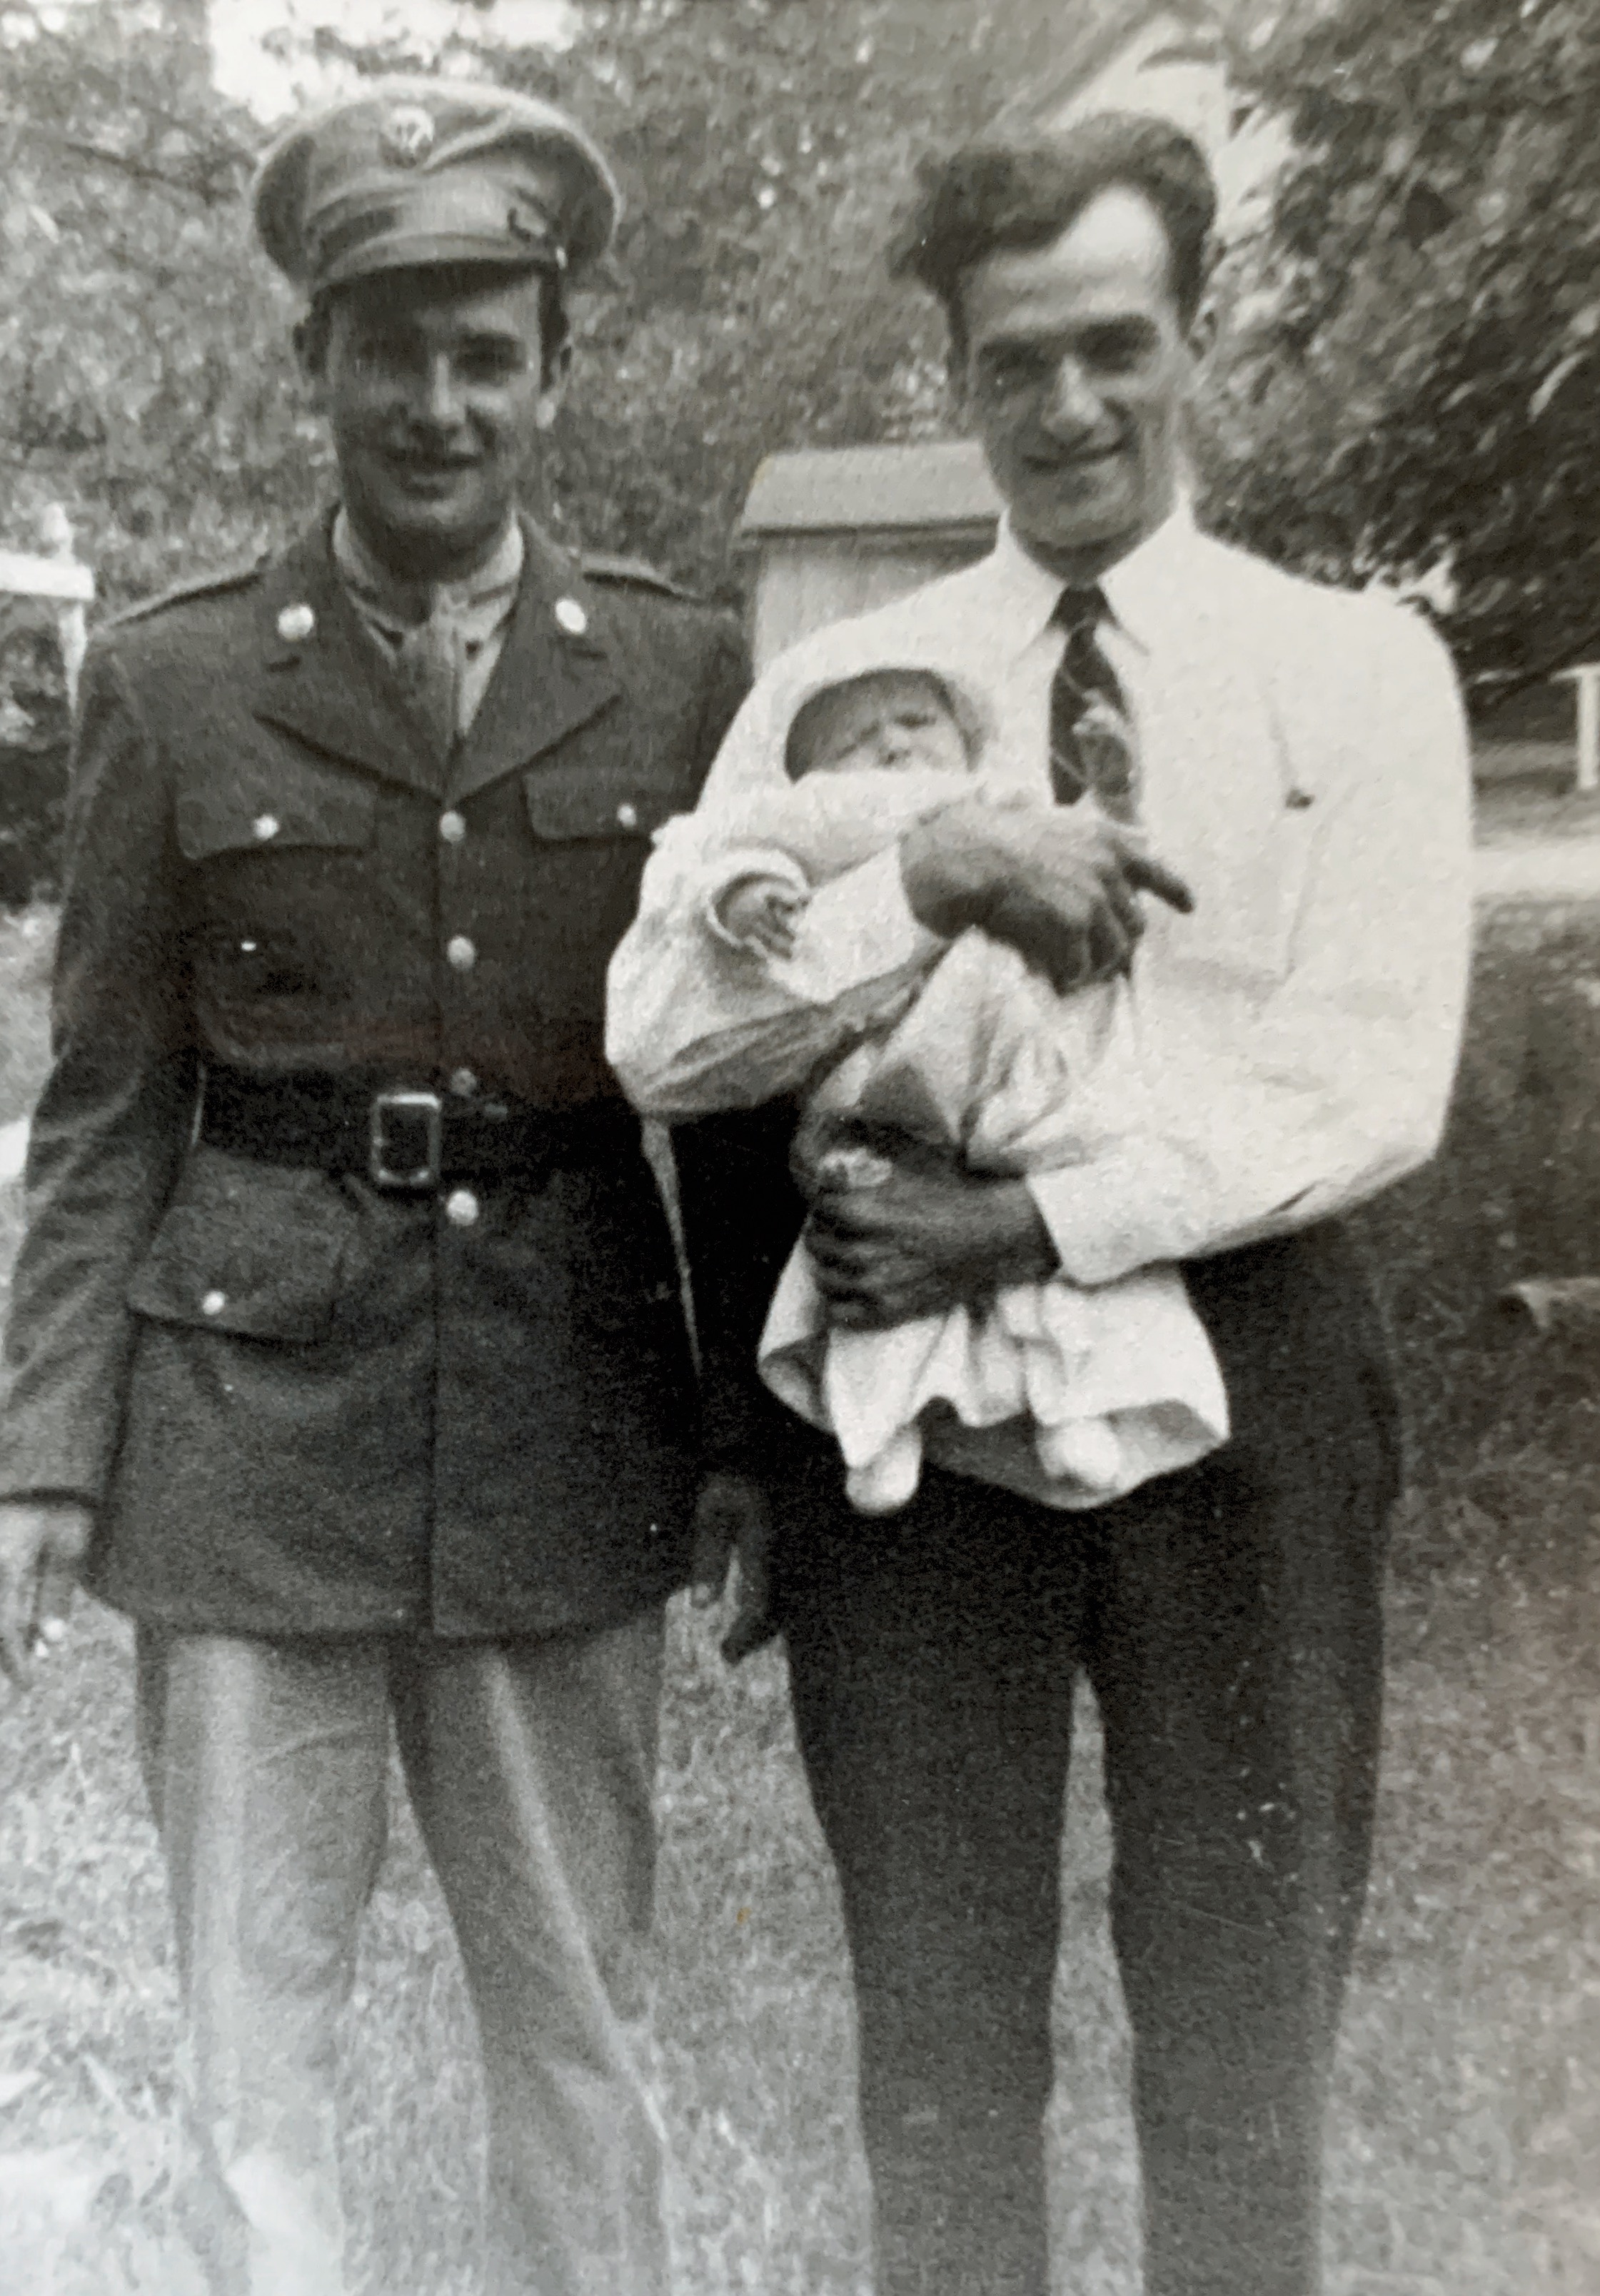 Baptism 1943 - Gary Blackburn in uniform, and Louis Blackburn holding son Larry. 